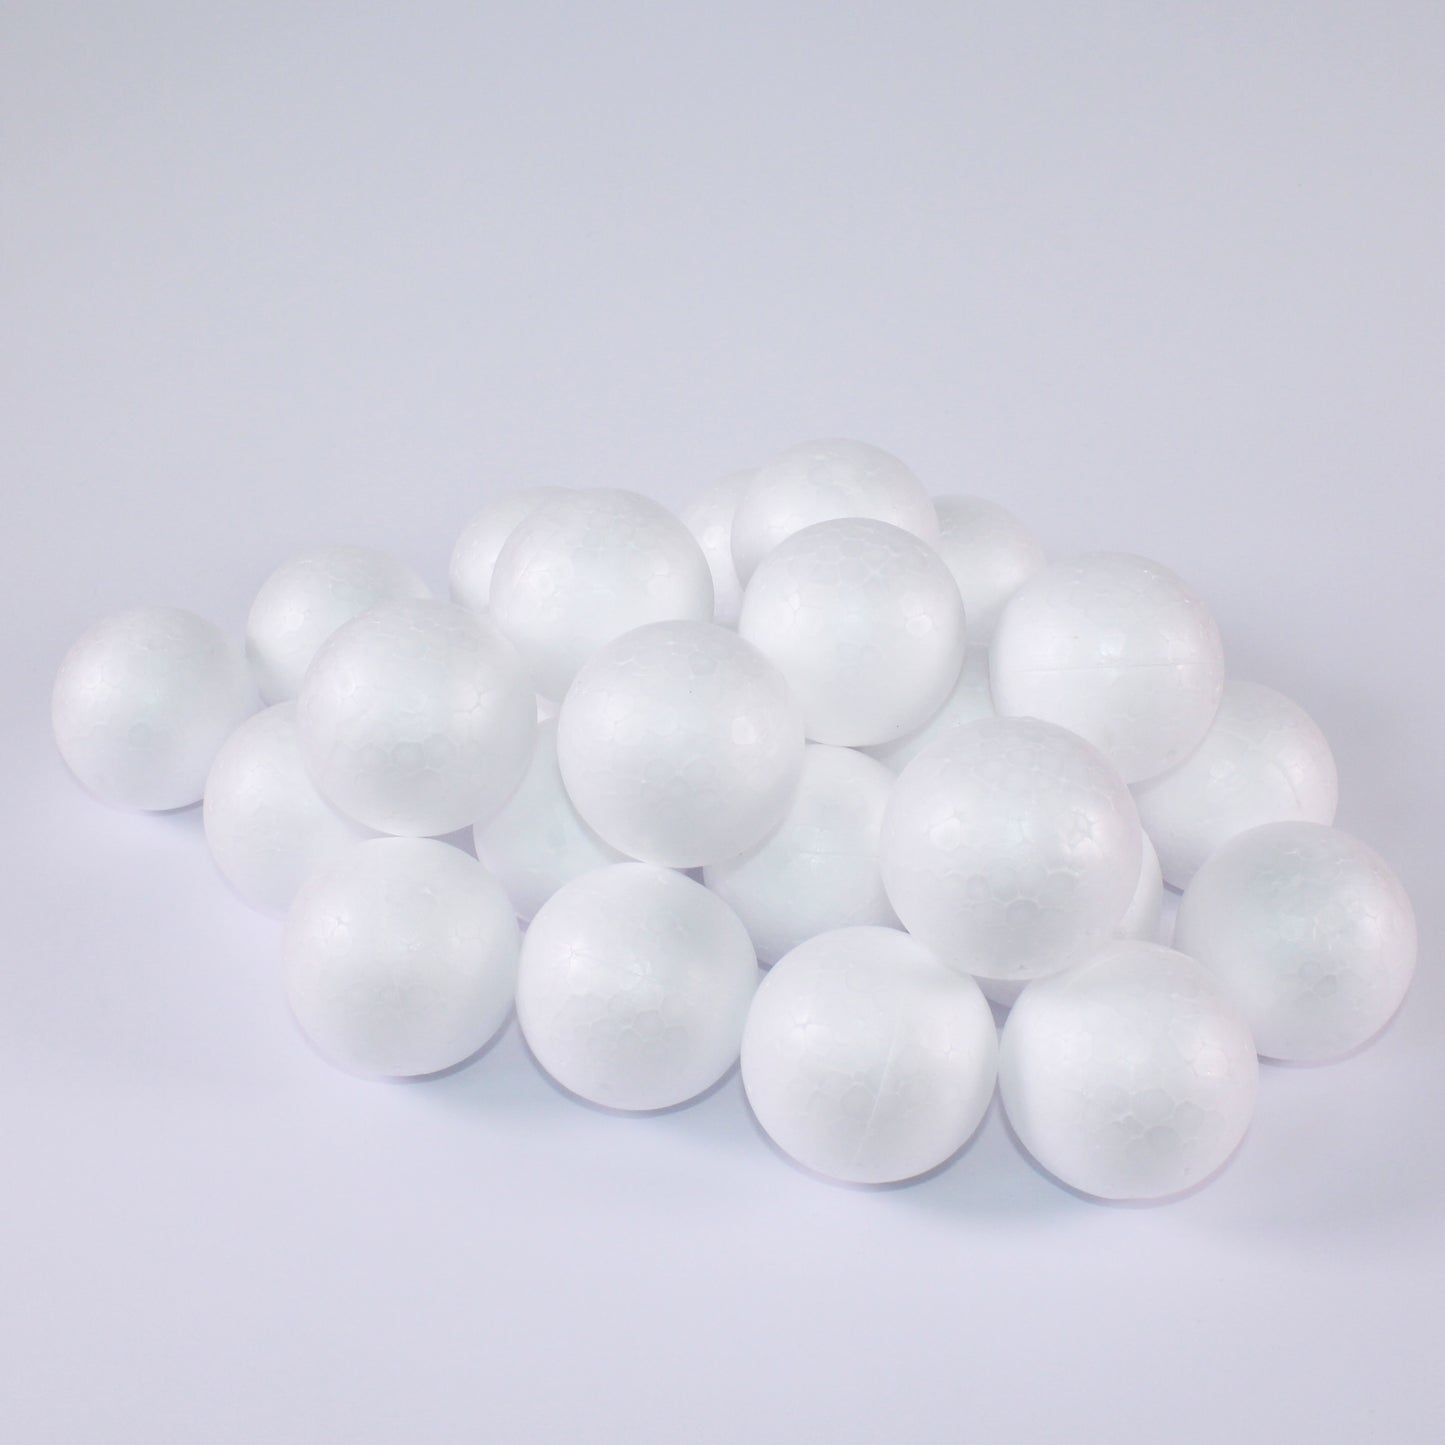 50mm polystyrene balls